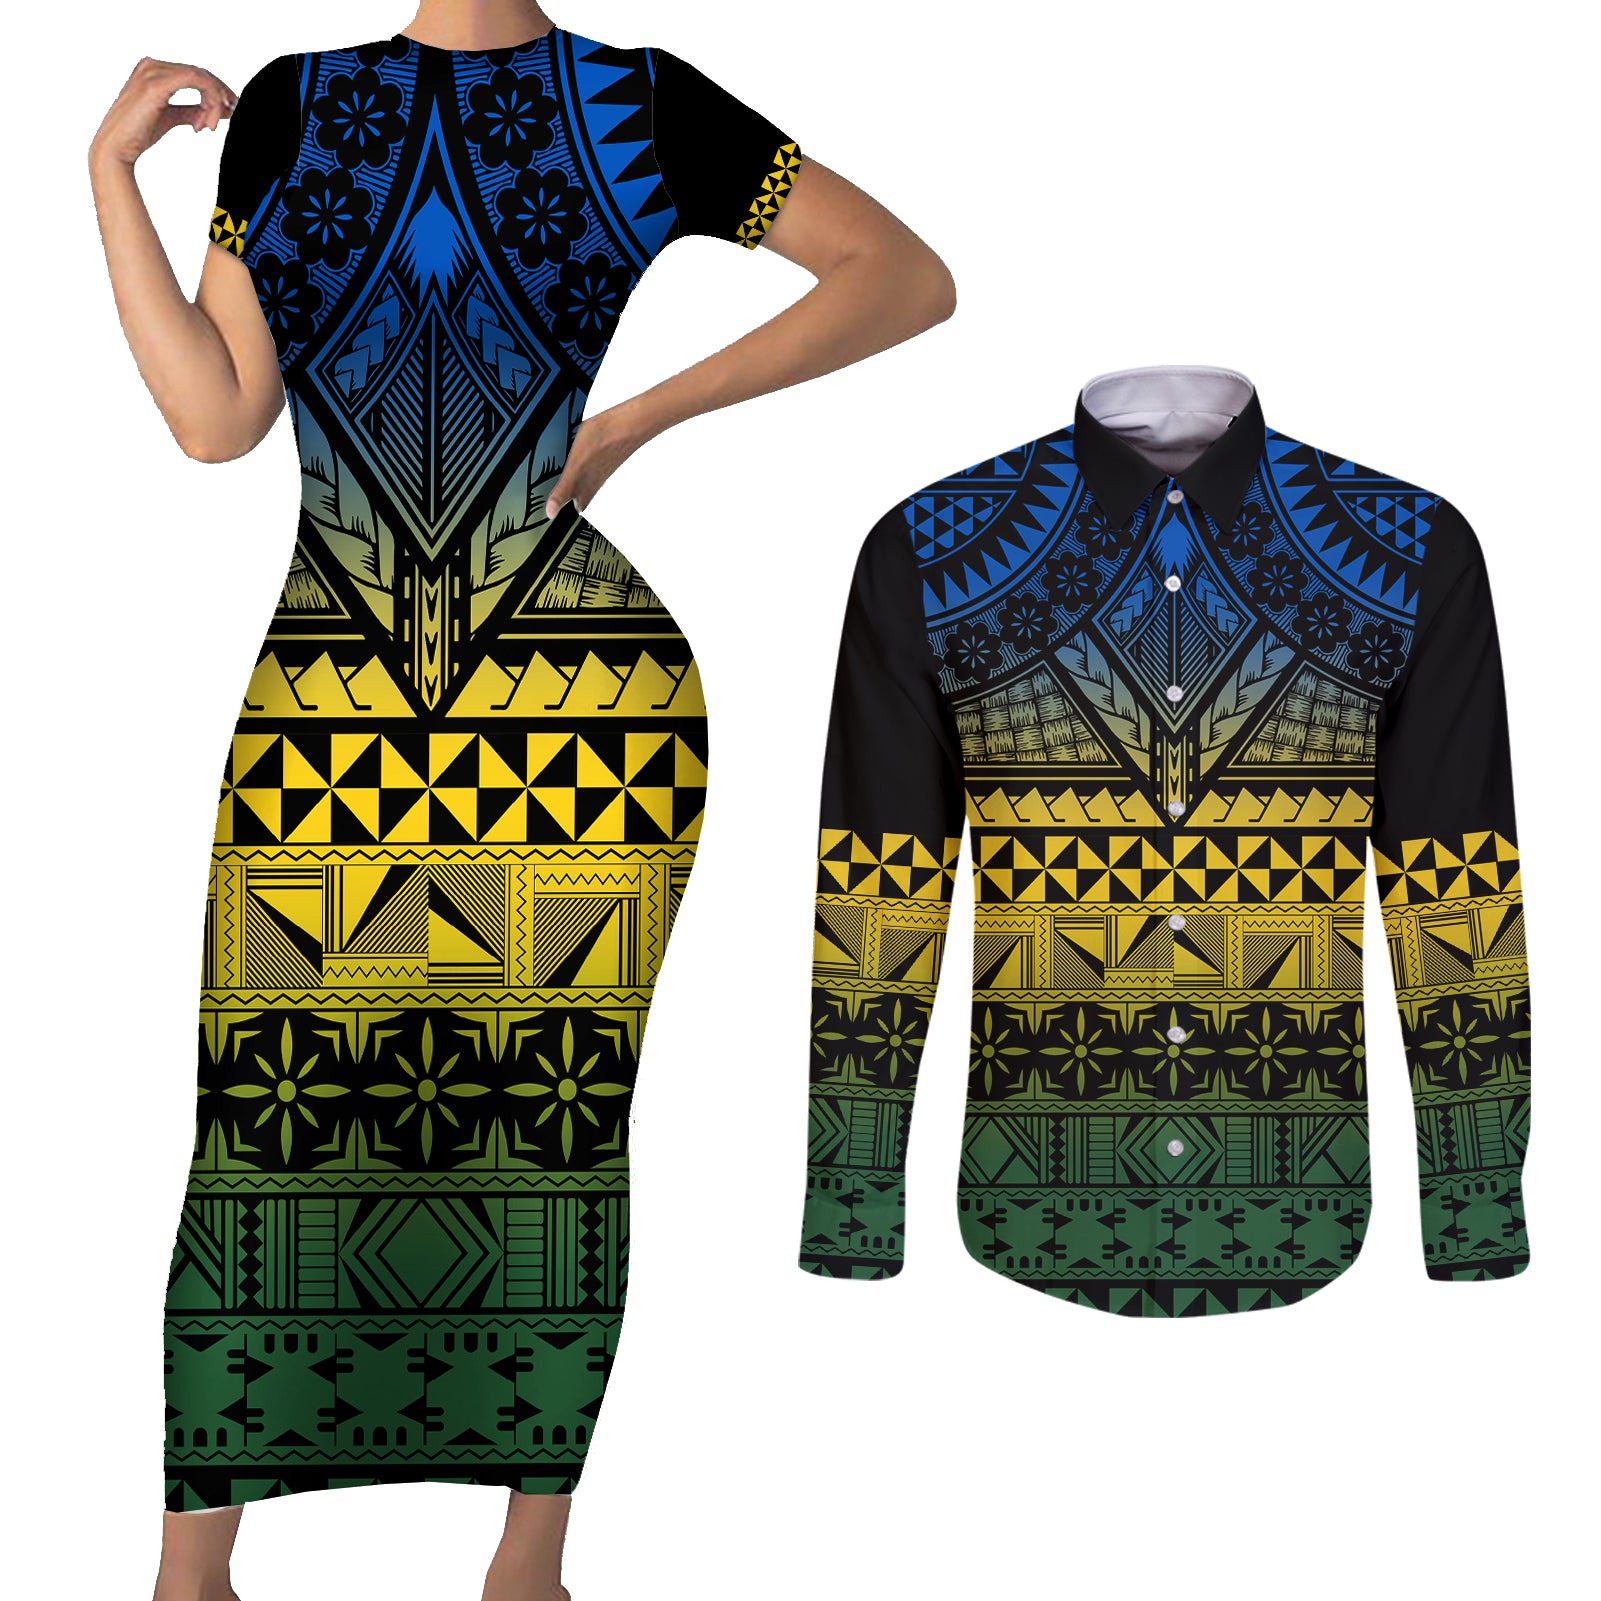 Halo Olaketa Solomon Islands Couples Matching Short Sleeve Bodycon Dress and Long Sleeve Button Shirt Melanesian Tribal Pattern Gradient Version LT14 Black - Polynesian Pride